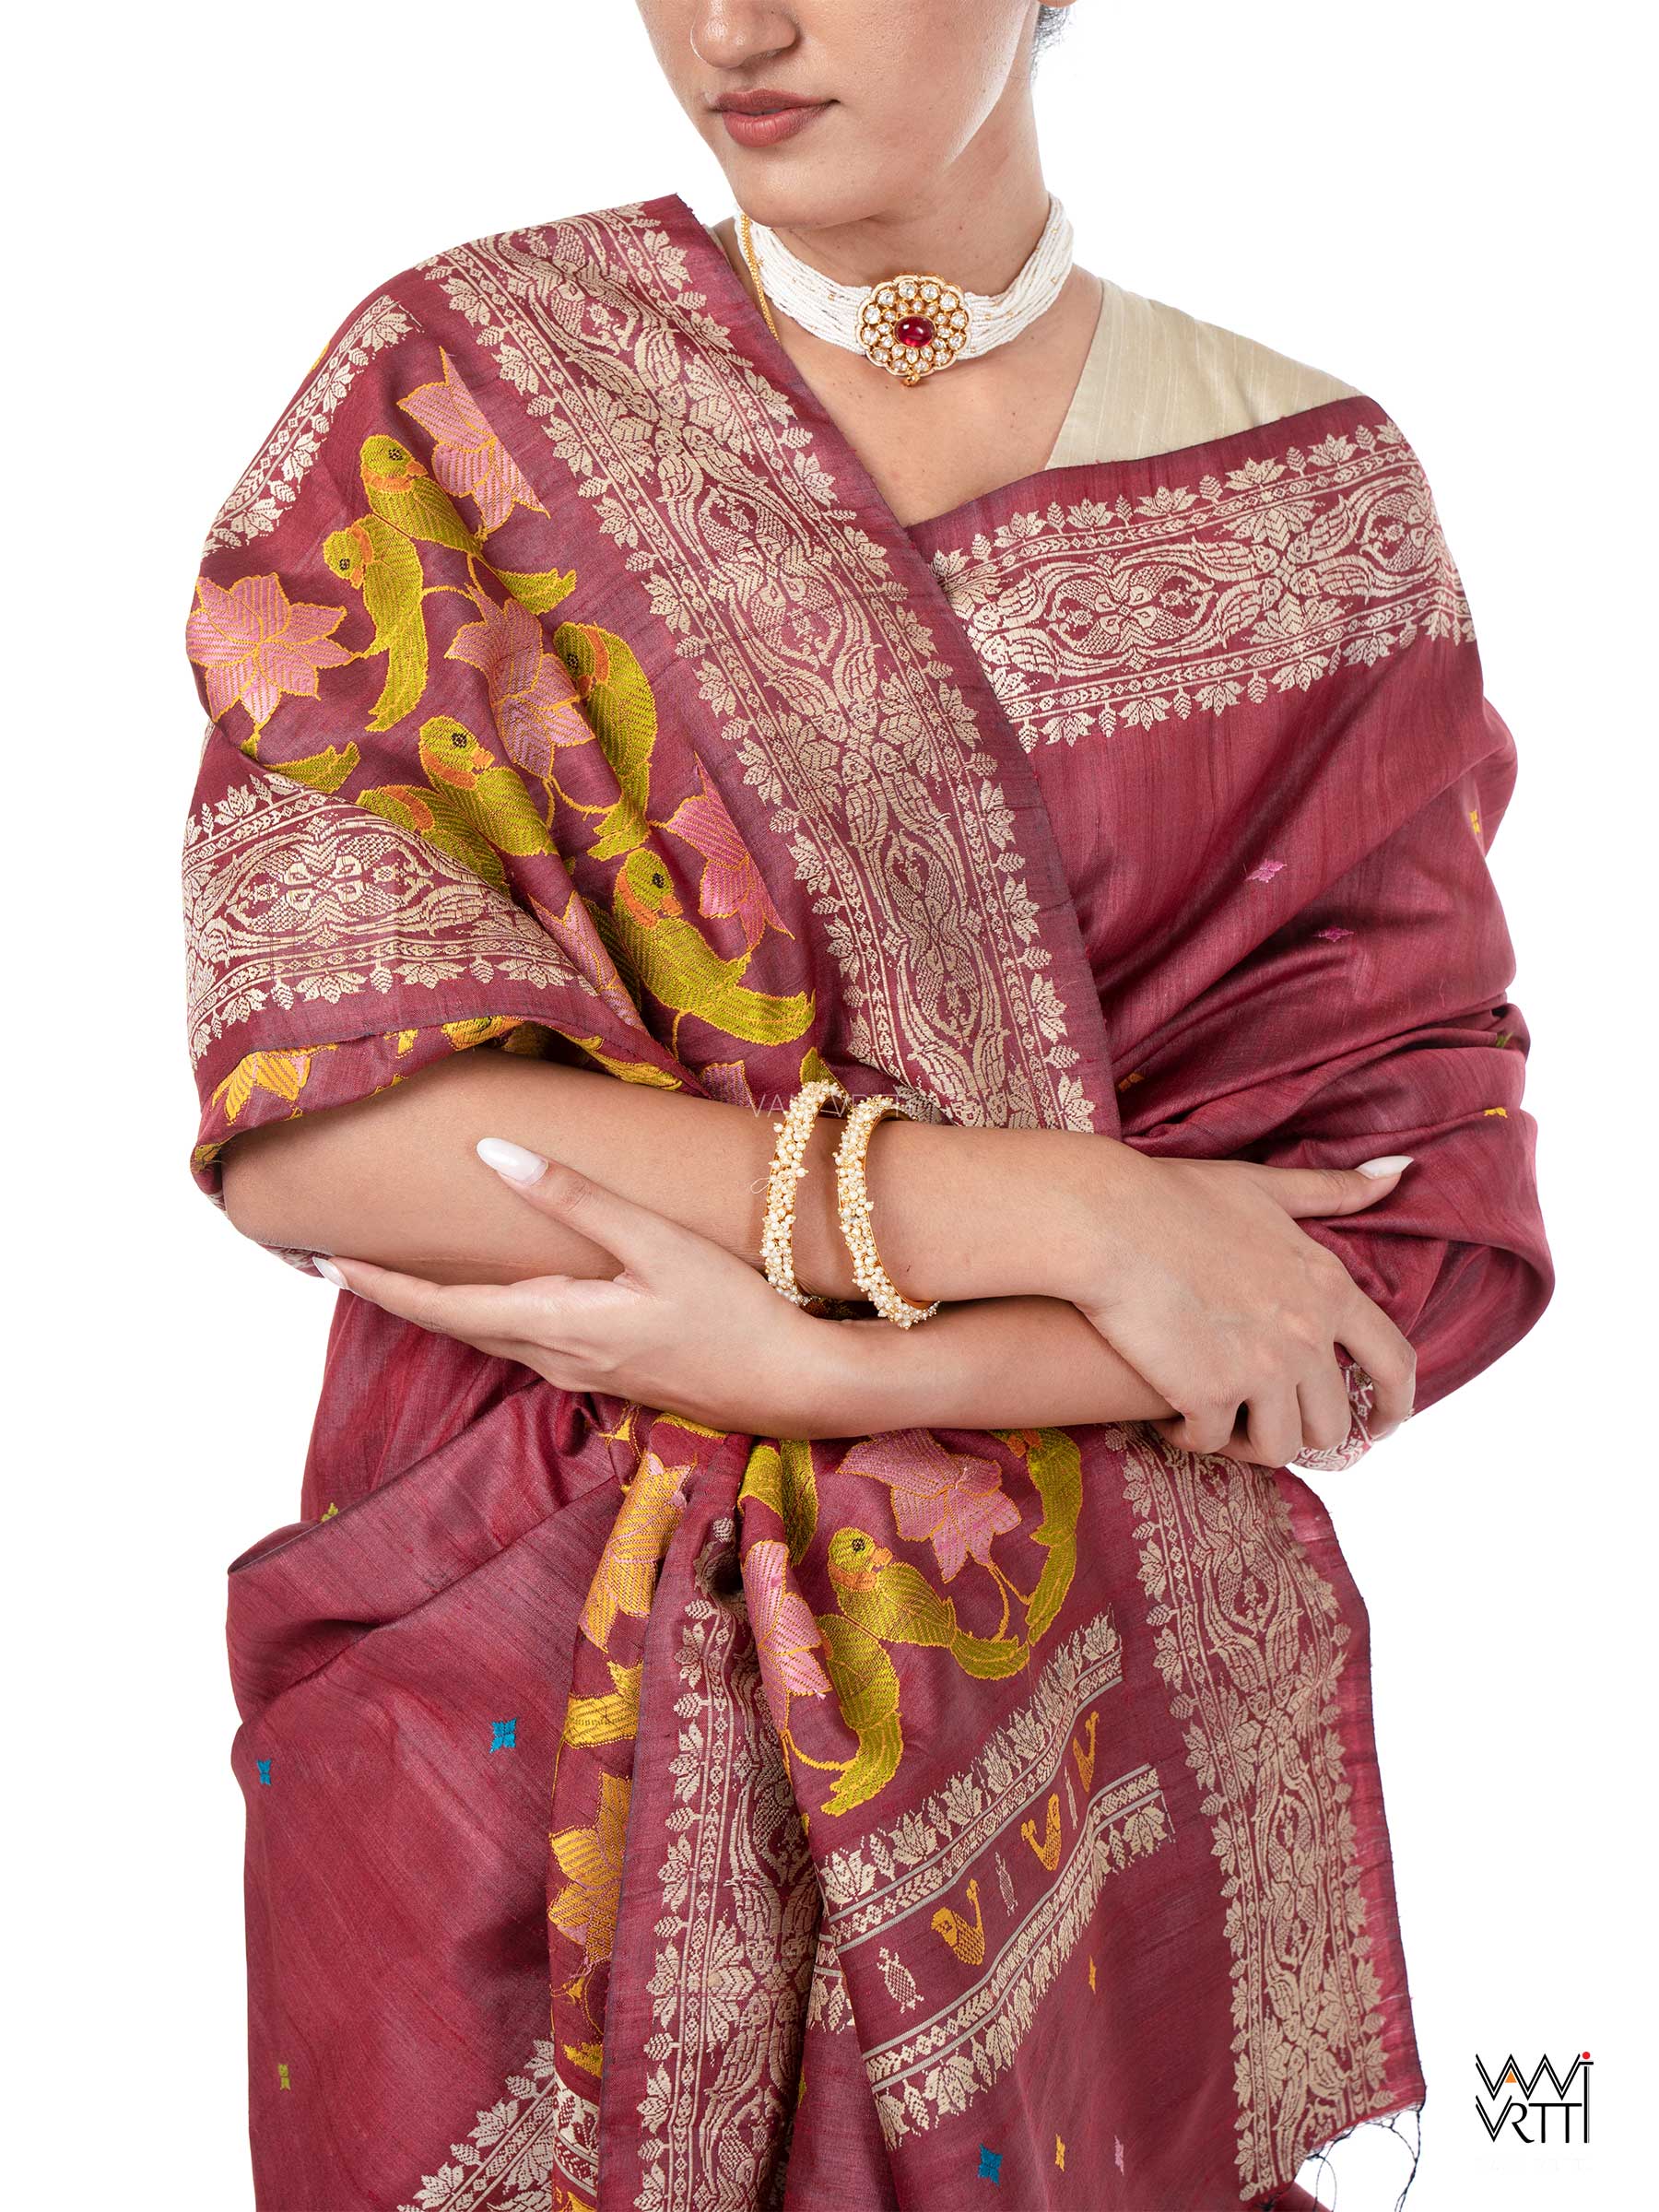 Classic Red Lotus Parrot Jaal Designer Exclusive Handspun Handwoven Tussar Silk Saree